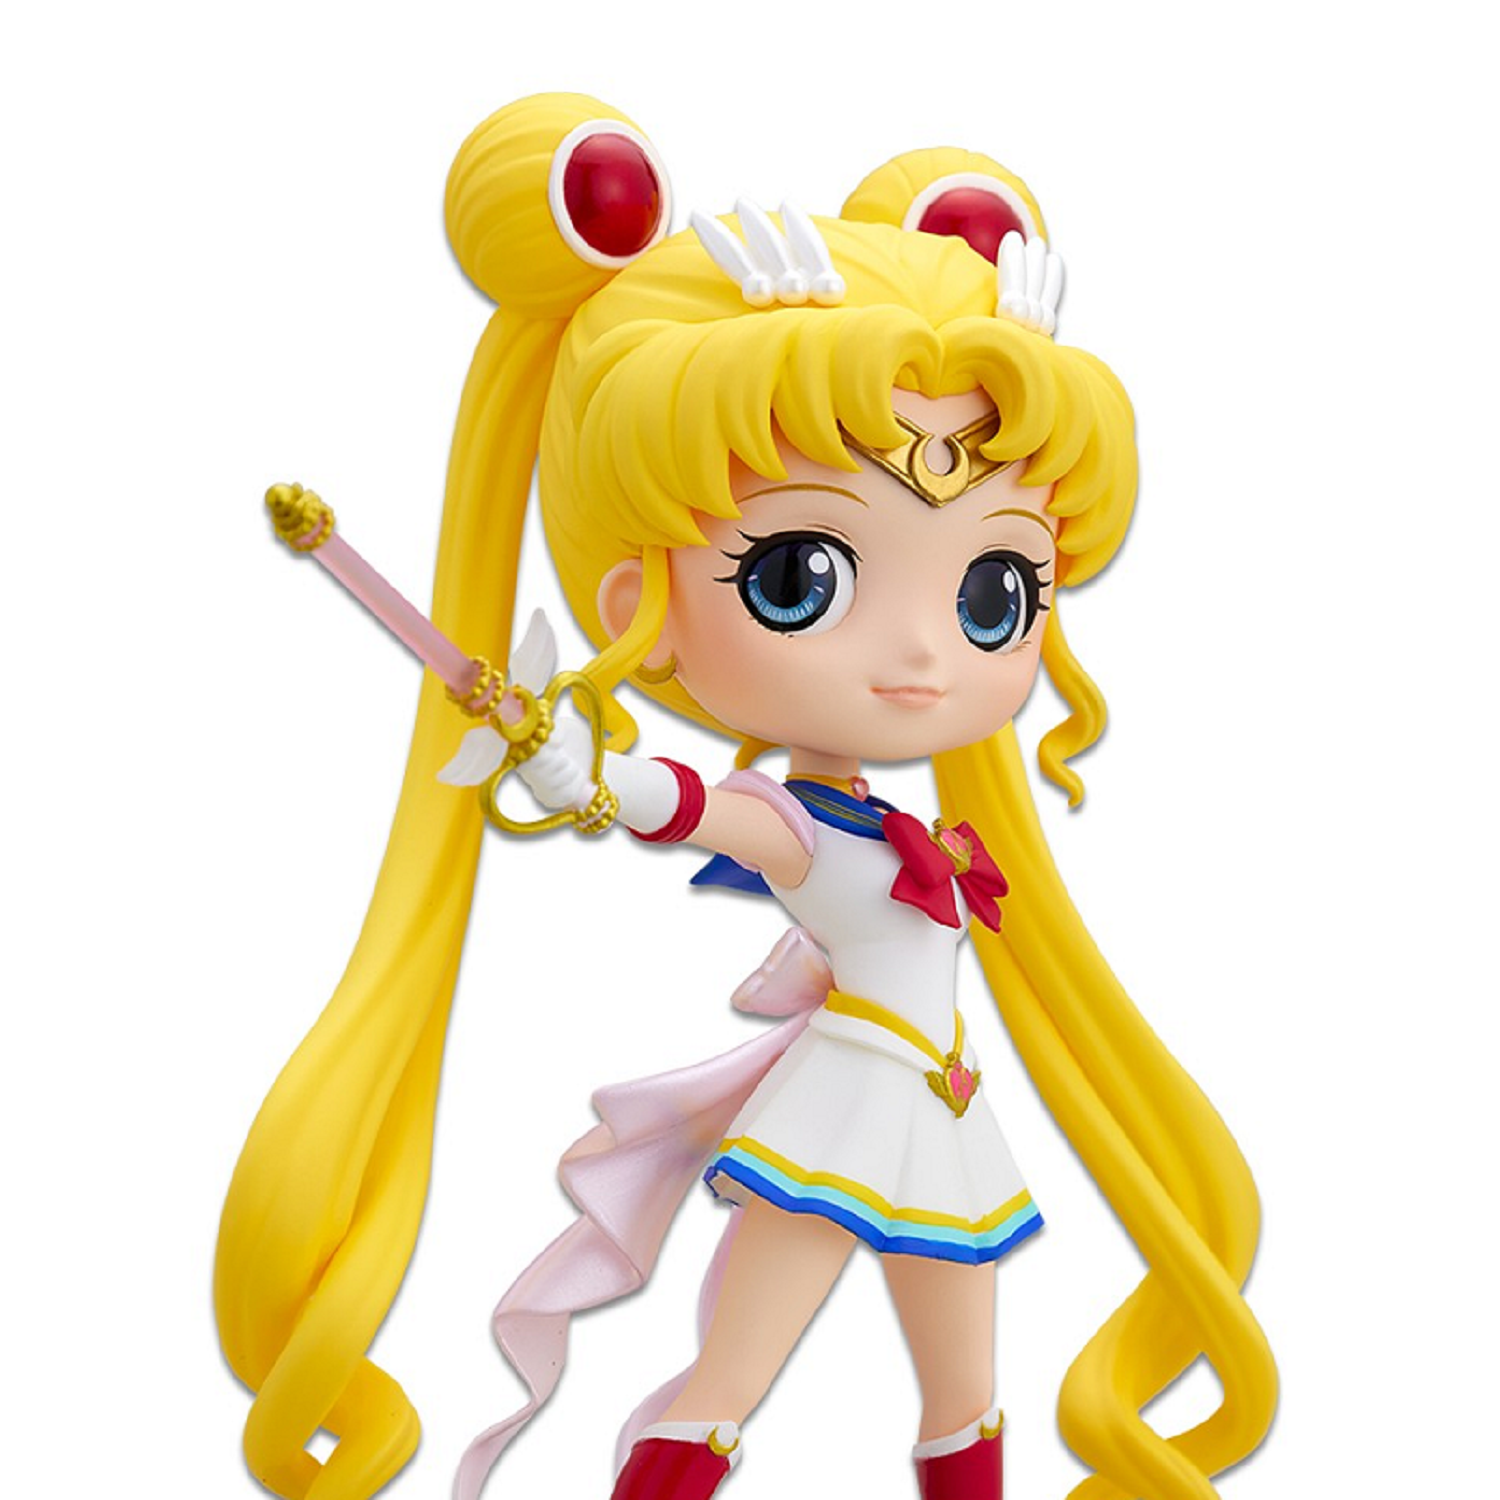 BANPRESTO cm Moon Posket Eternal Sailor 14 Moon Sailor Q Minifigur Sammelfigur Super